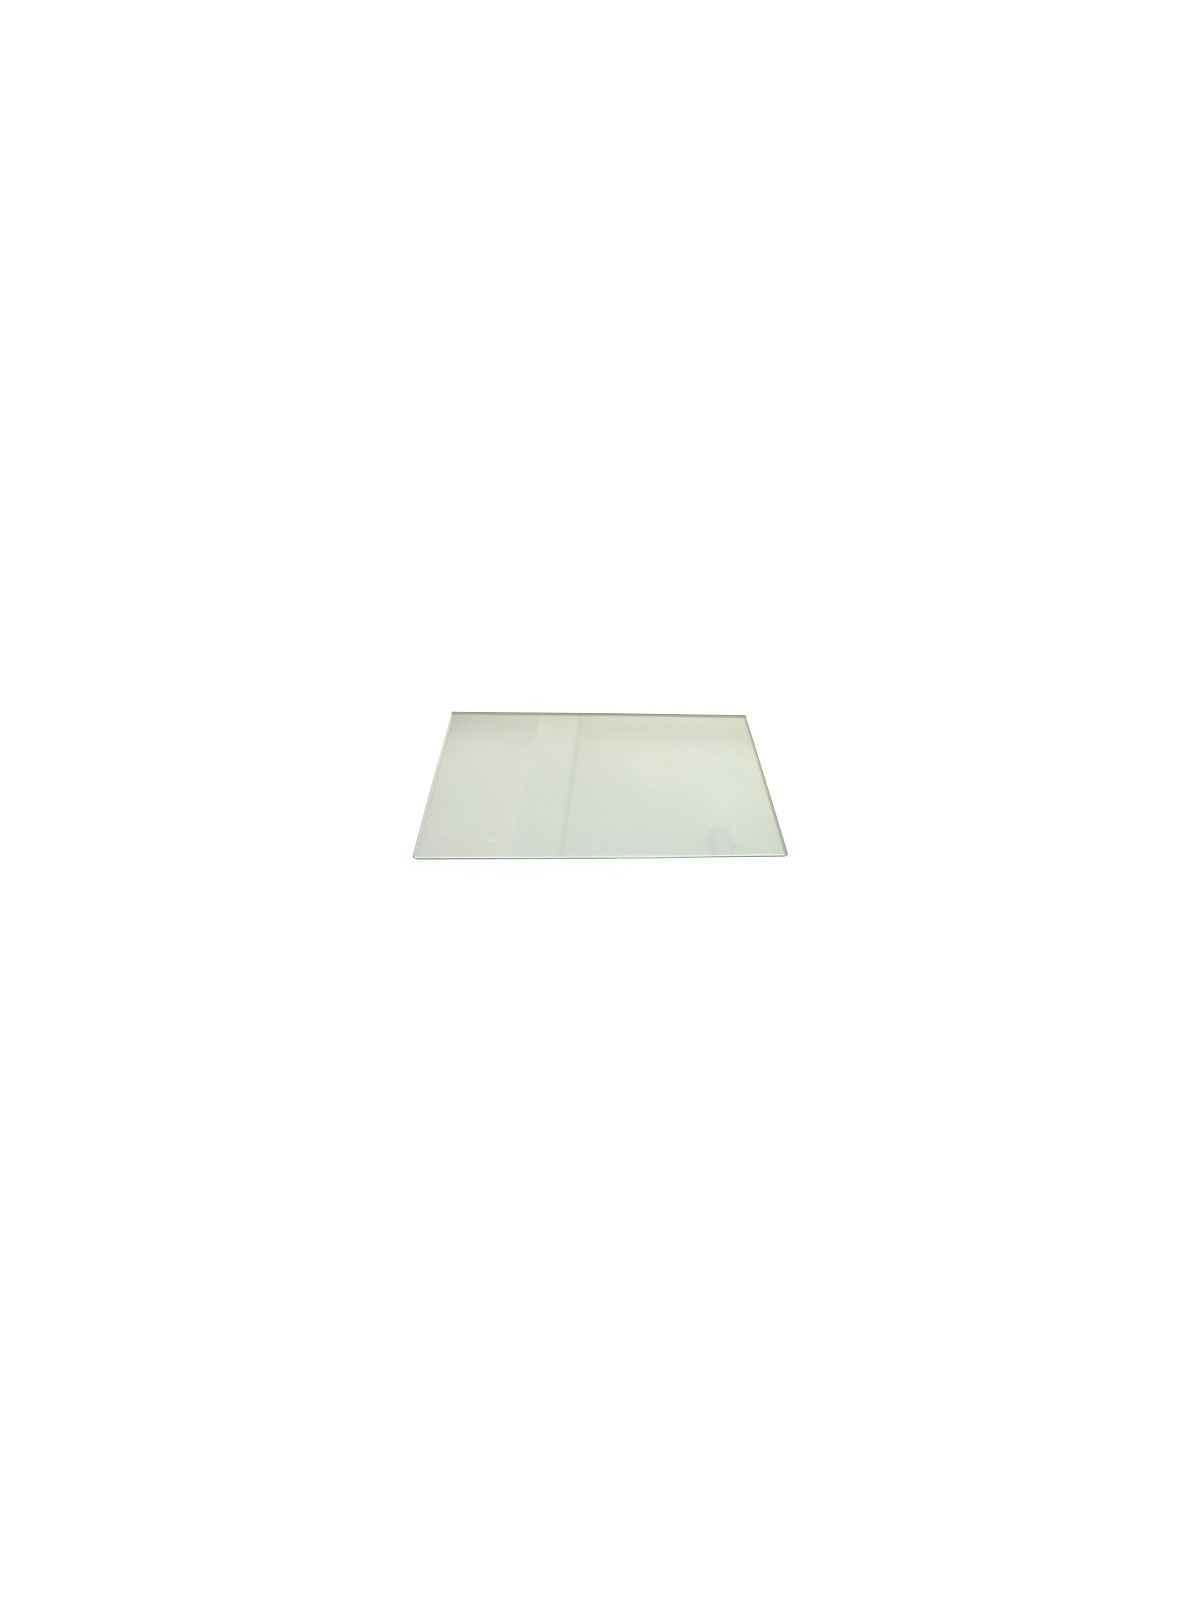 Placa rectangular transparente AXPET, 120 x 3 x 240 mm.